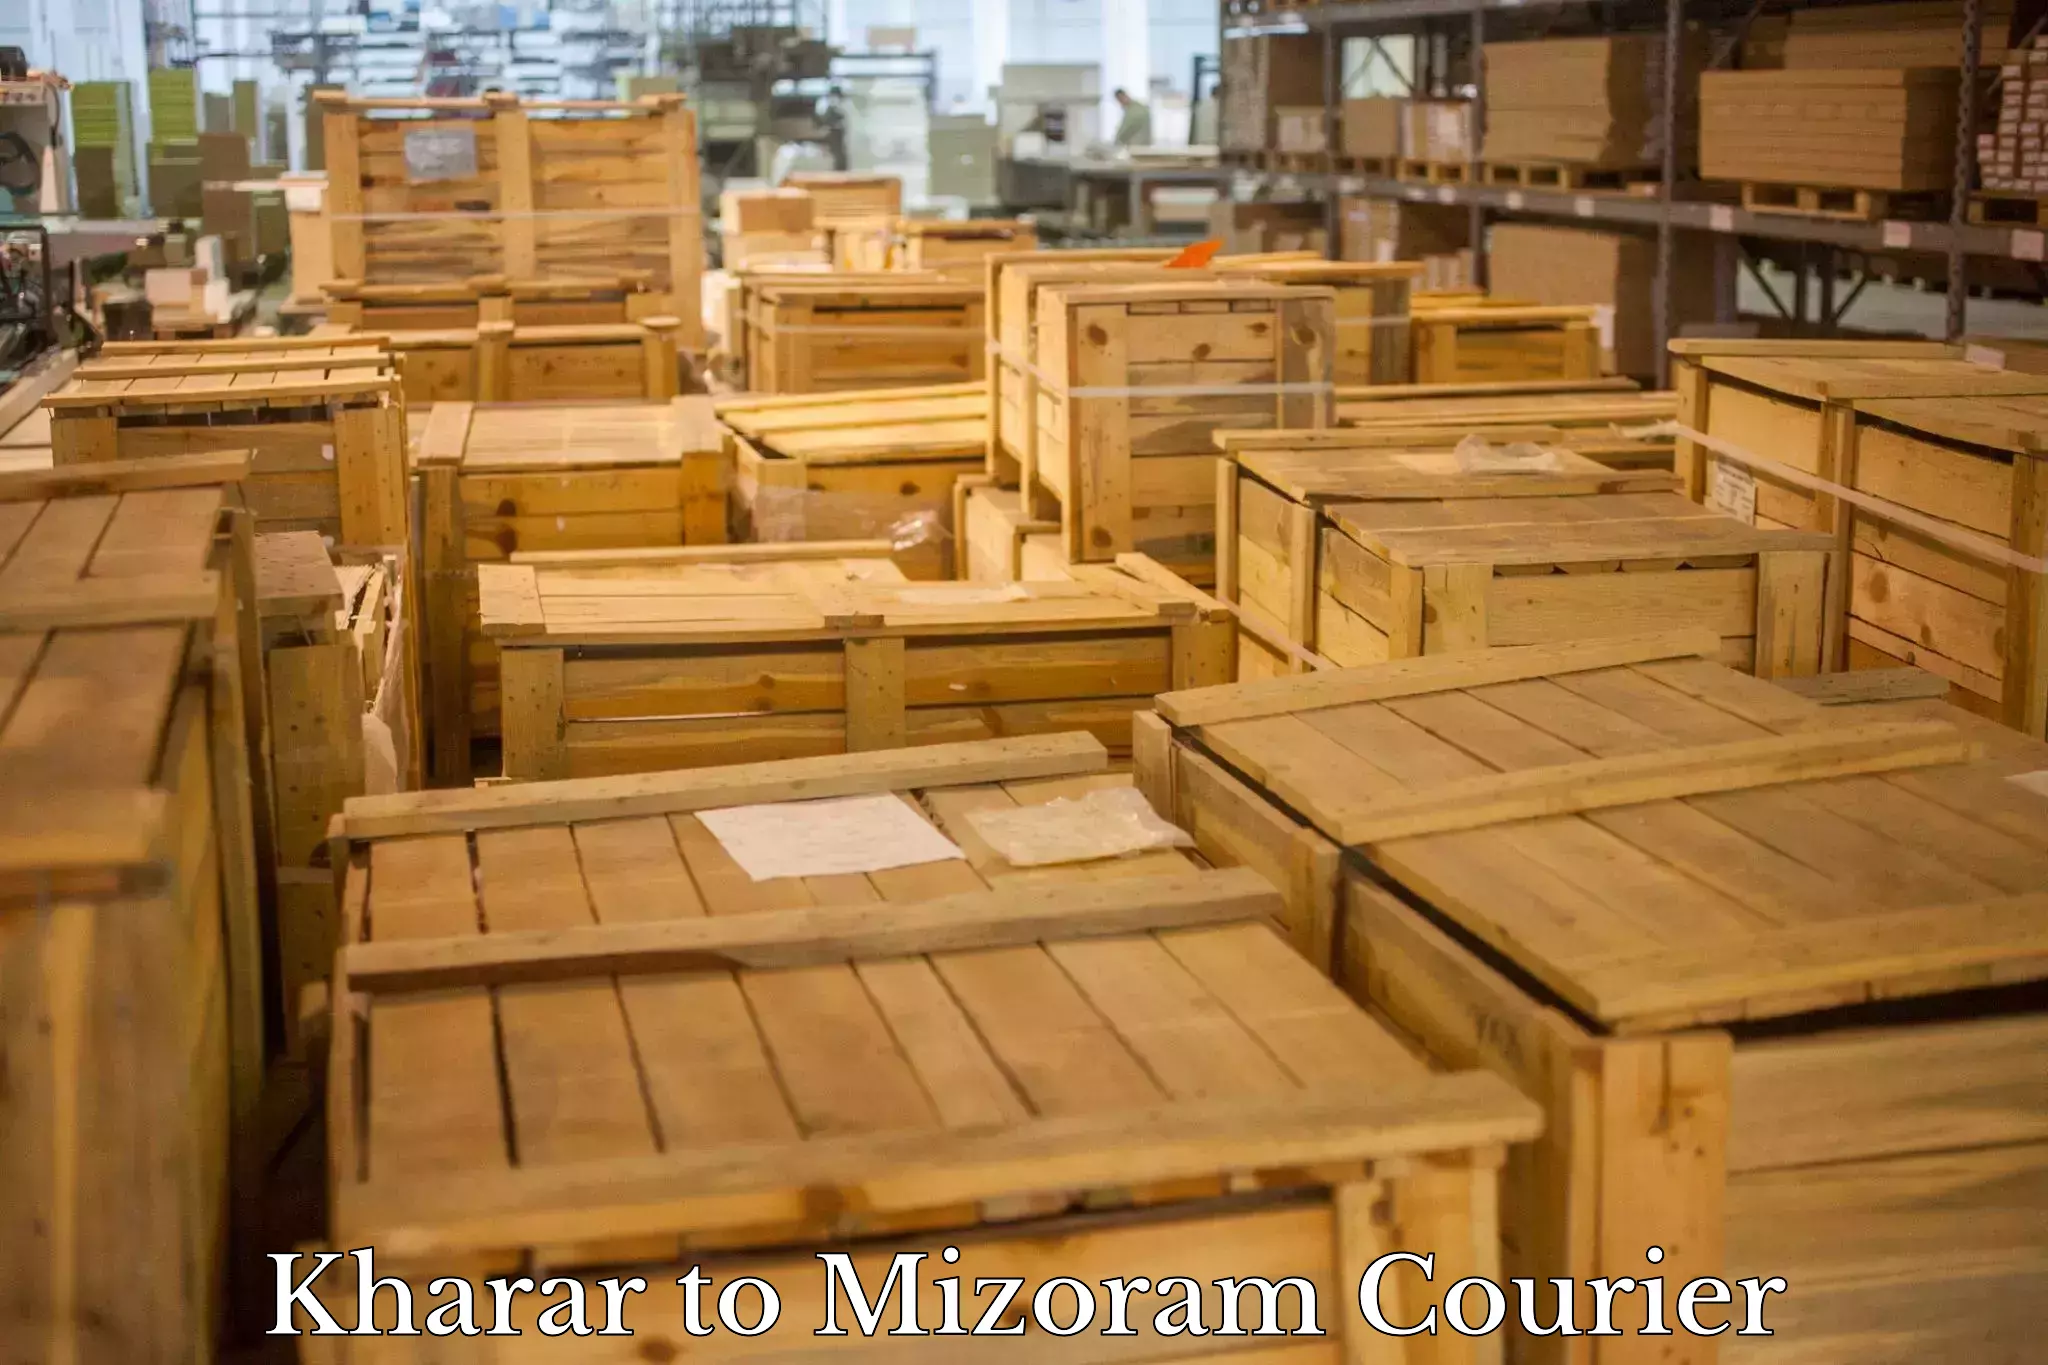 Customer-centric shipping Kharar to Mizoram